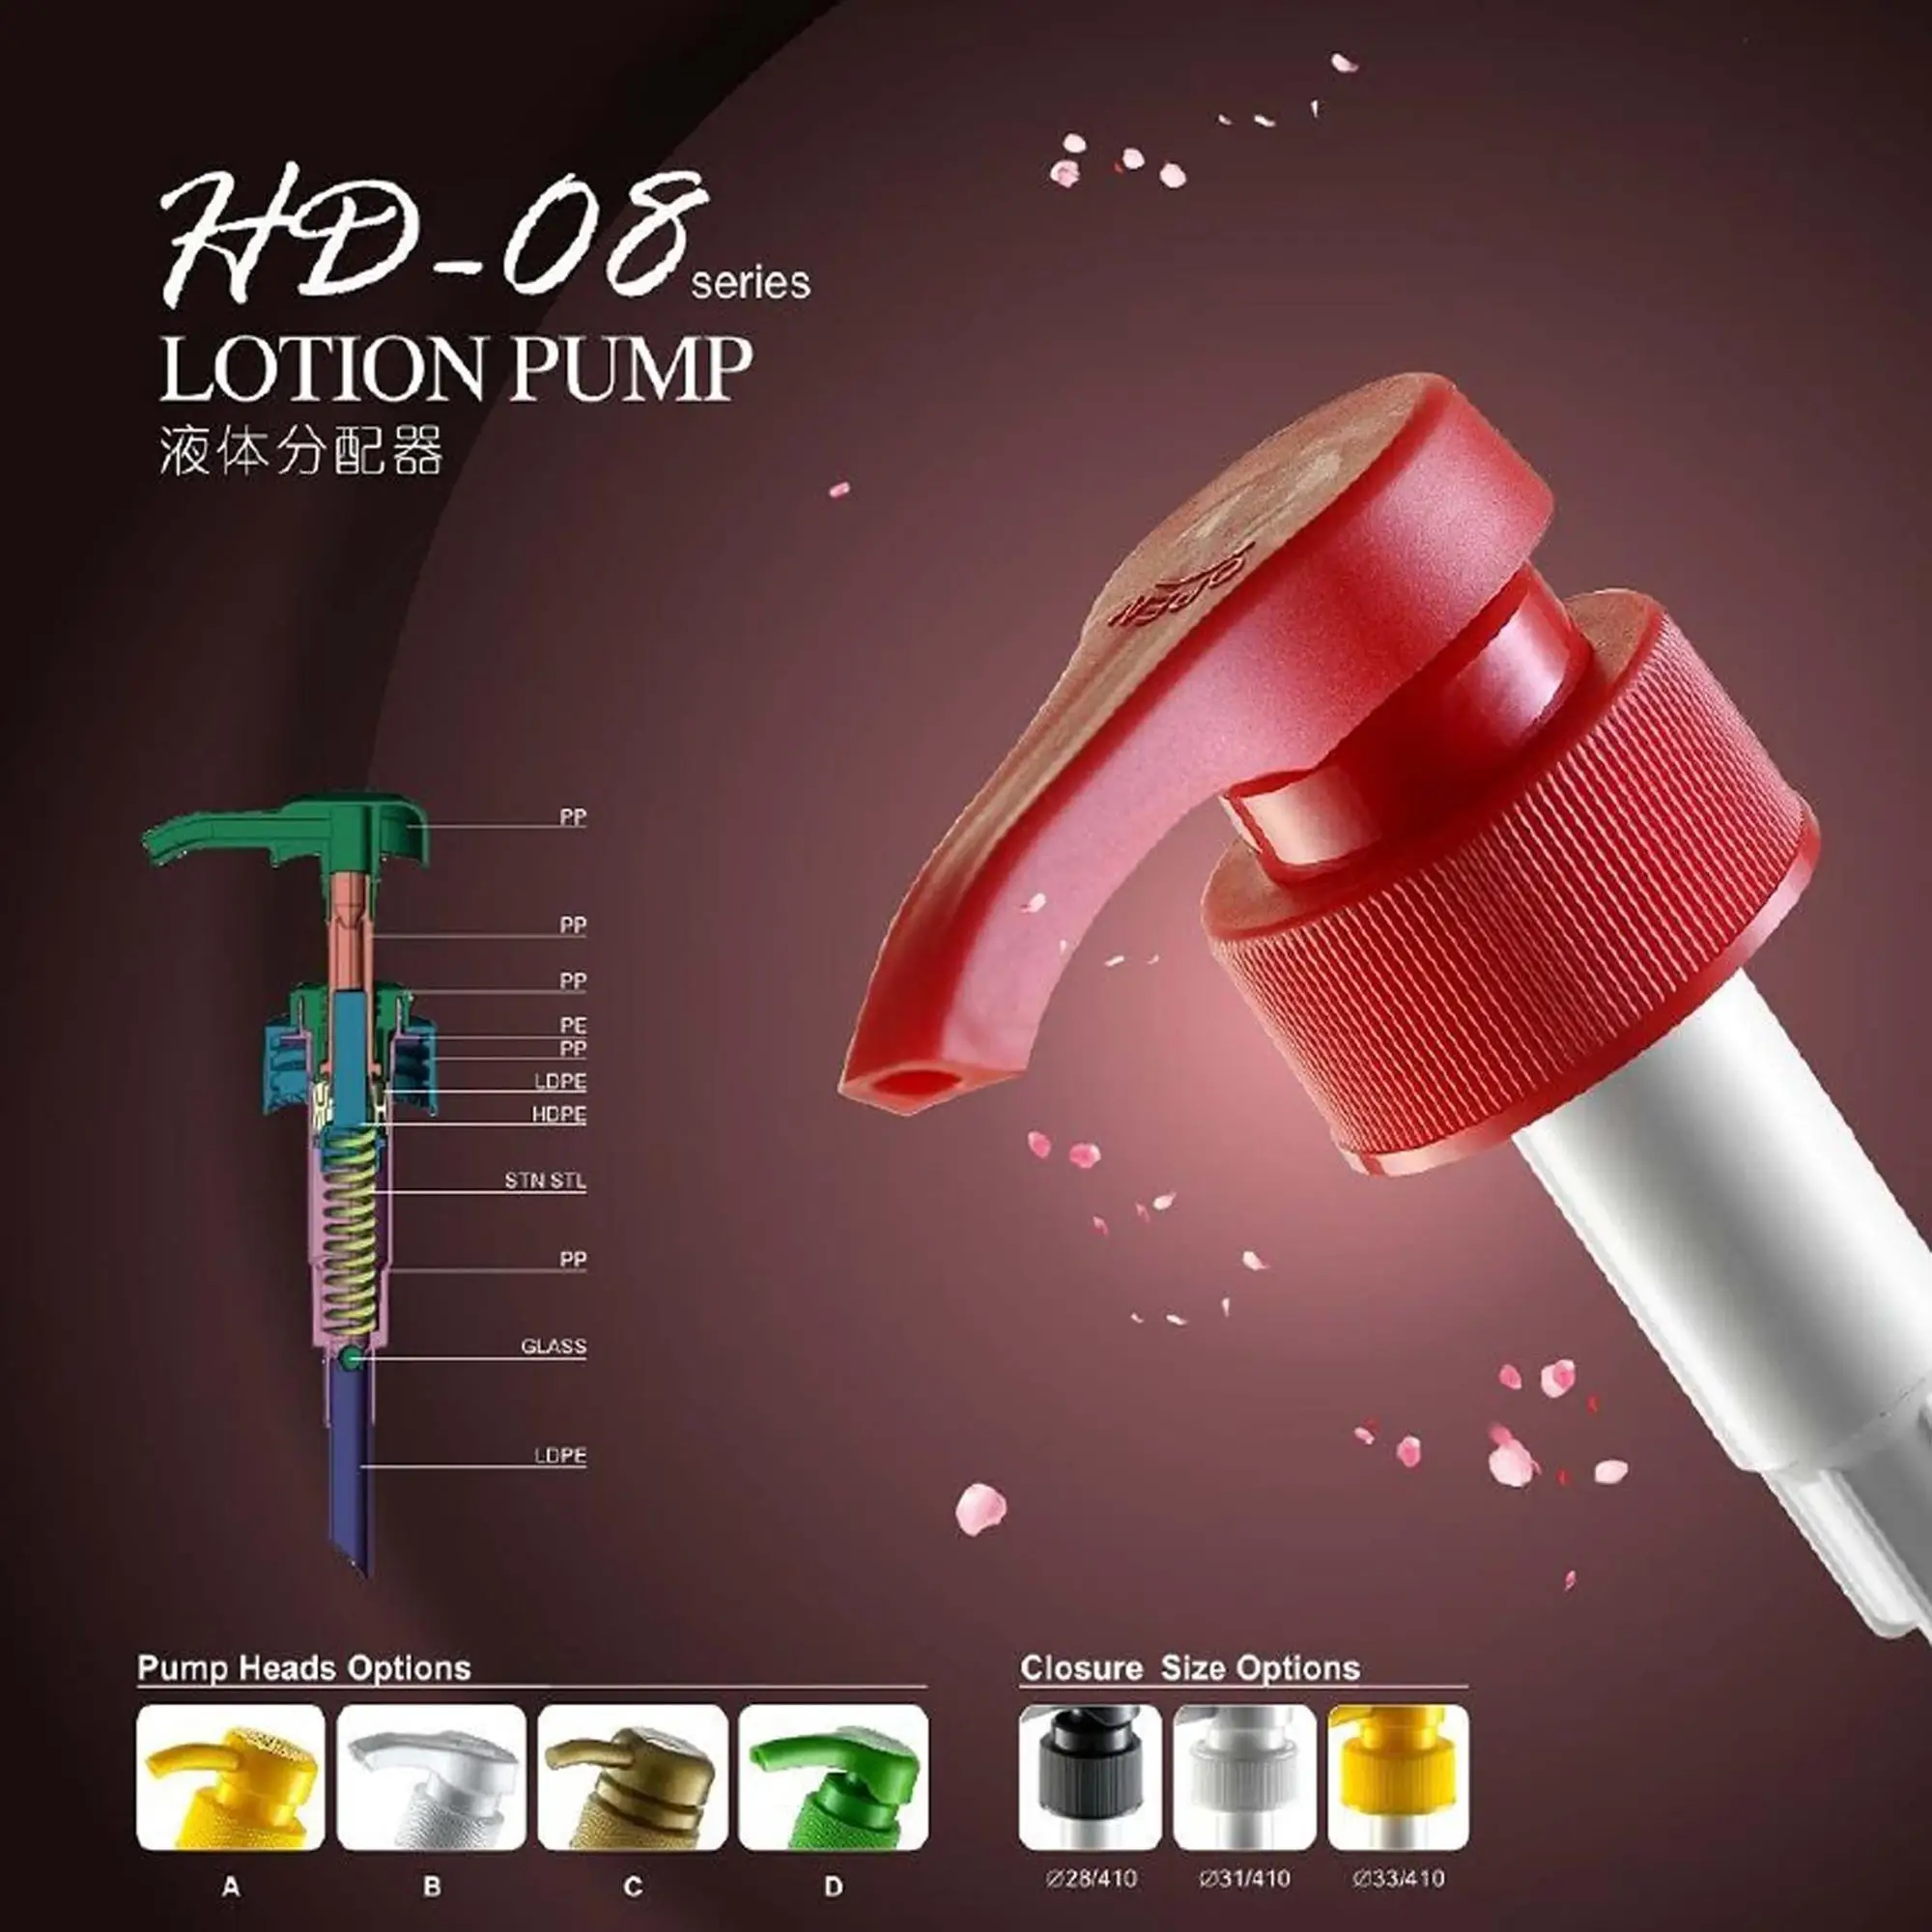 Free sample 38/410 31/410 28/410 professional plastic shampoo lotion pump